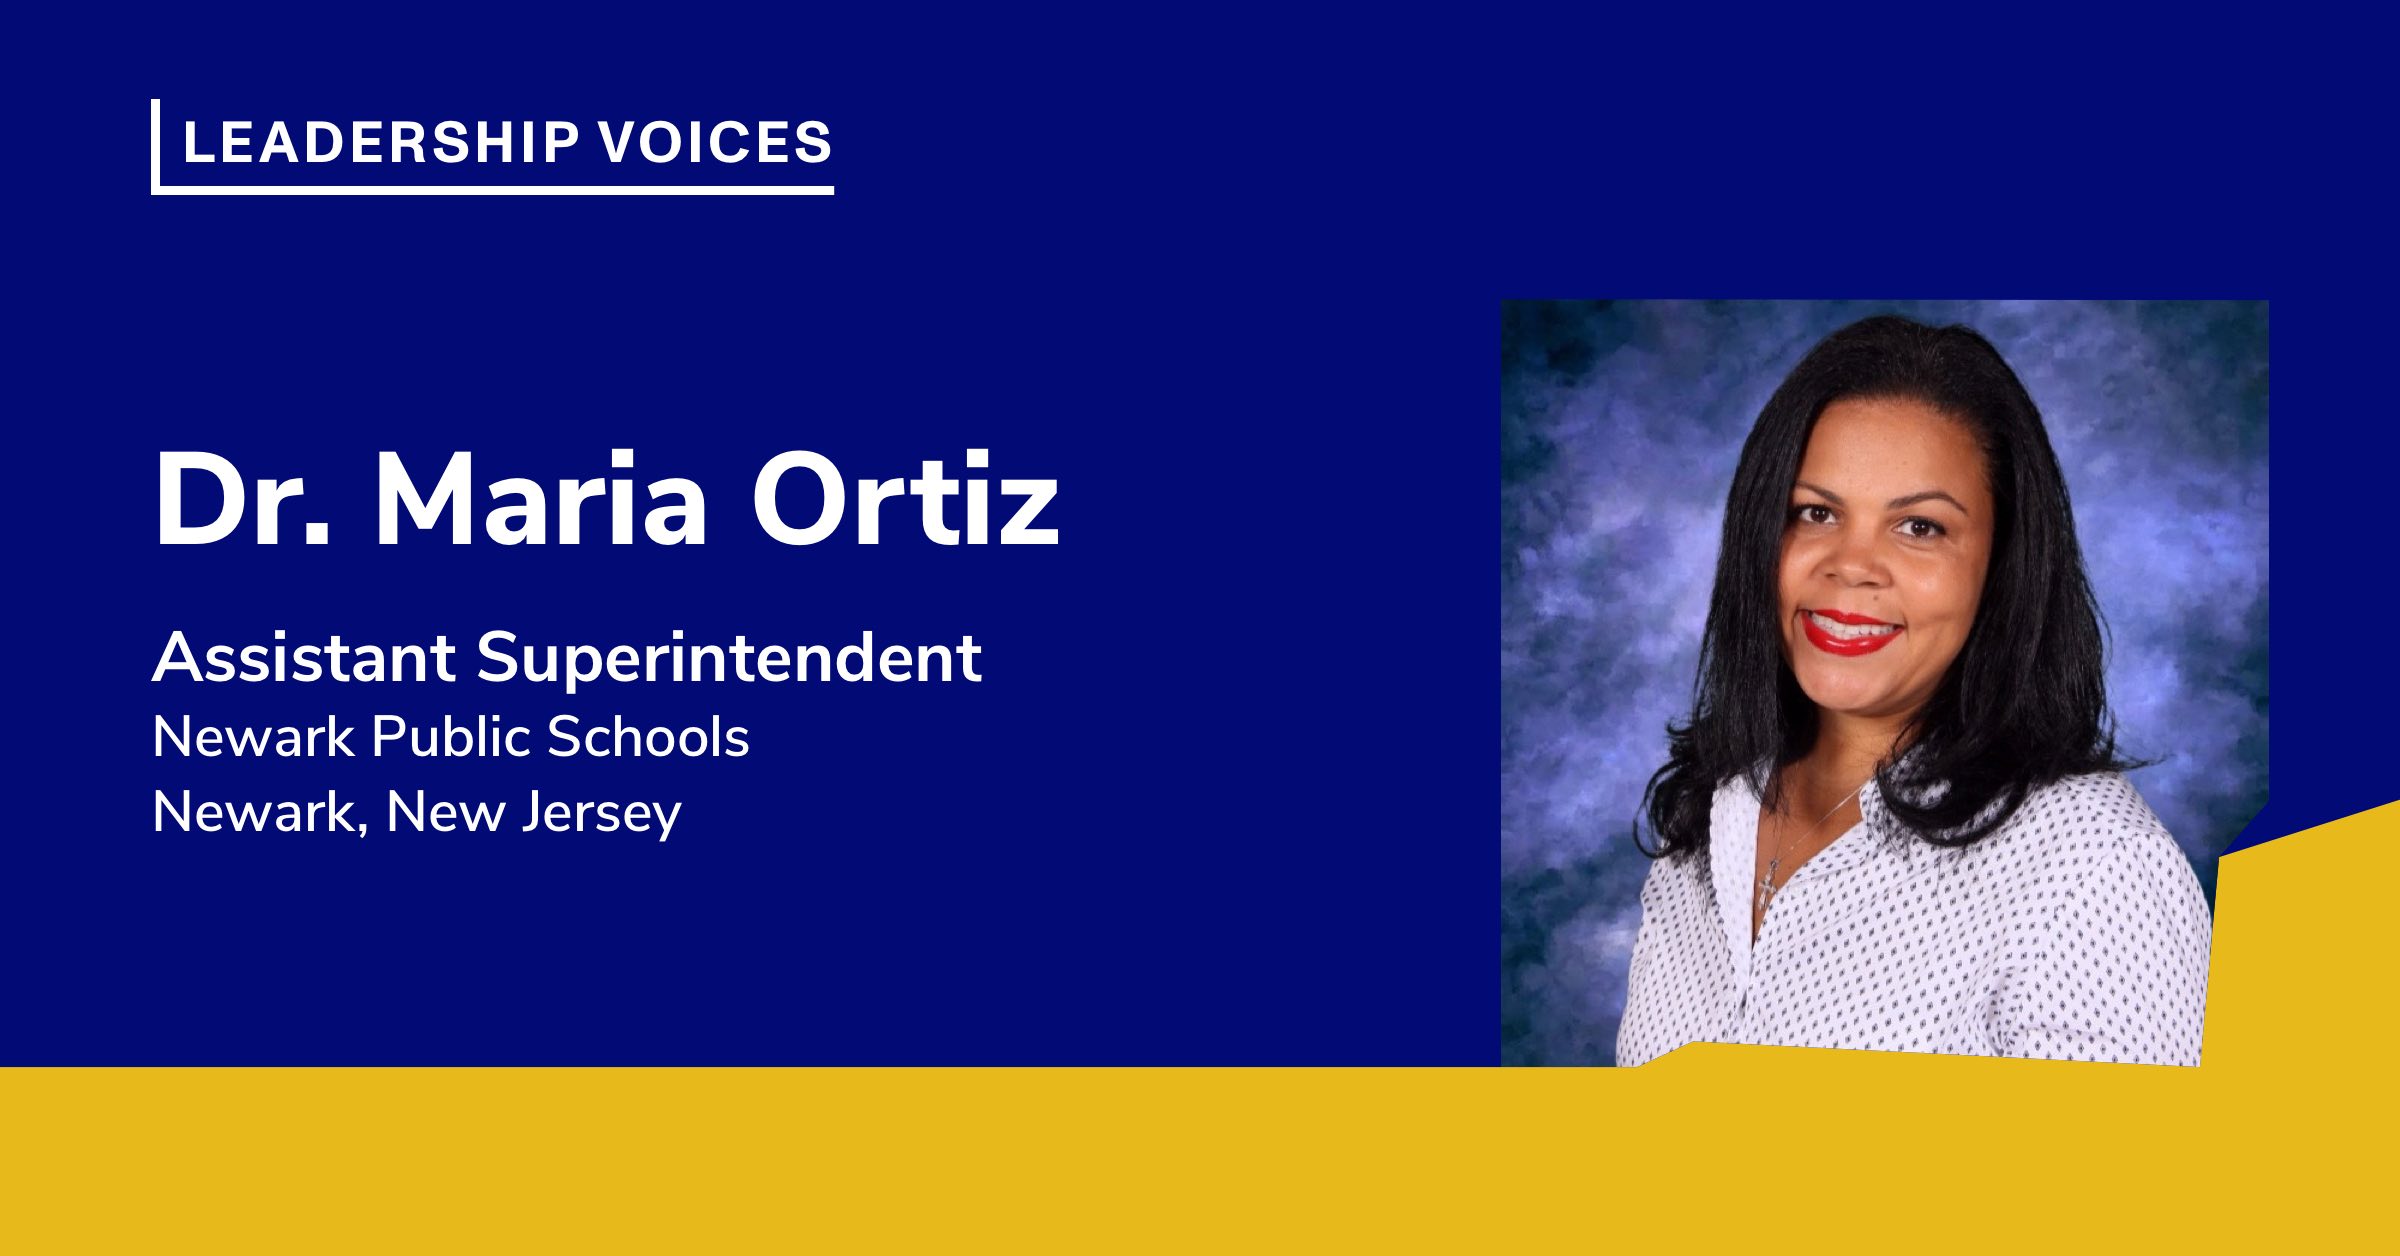 Dr. Maria Ortiz: Assistant Superintendent, Newark Public Schools, Newark, New Jersey